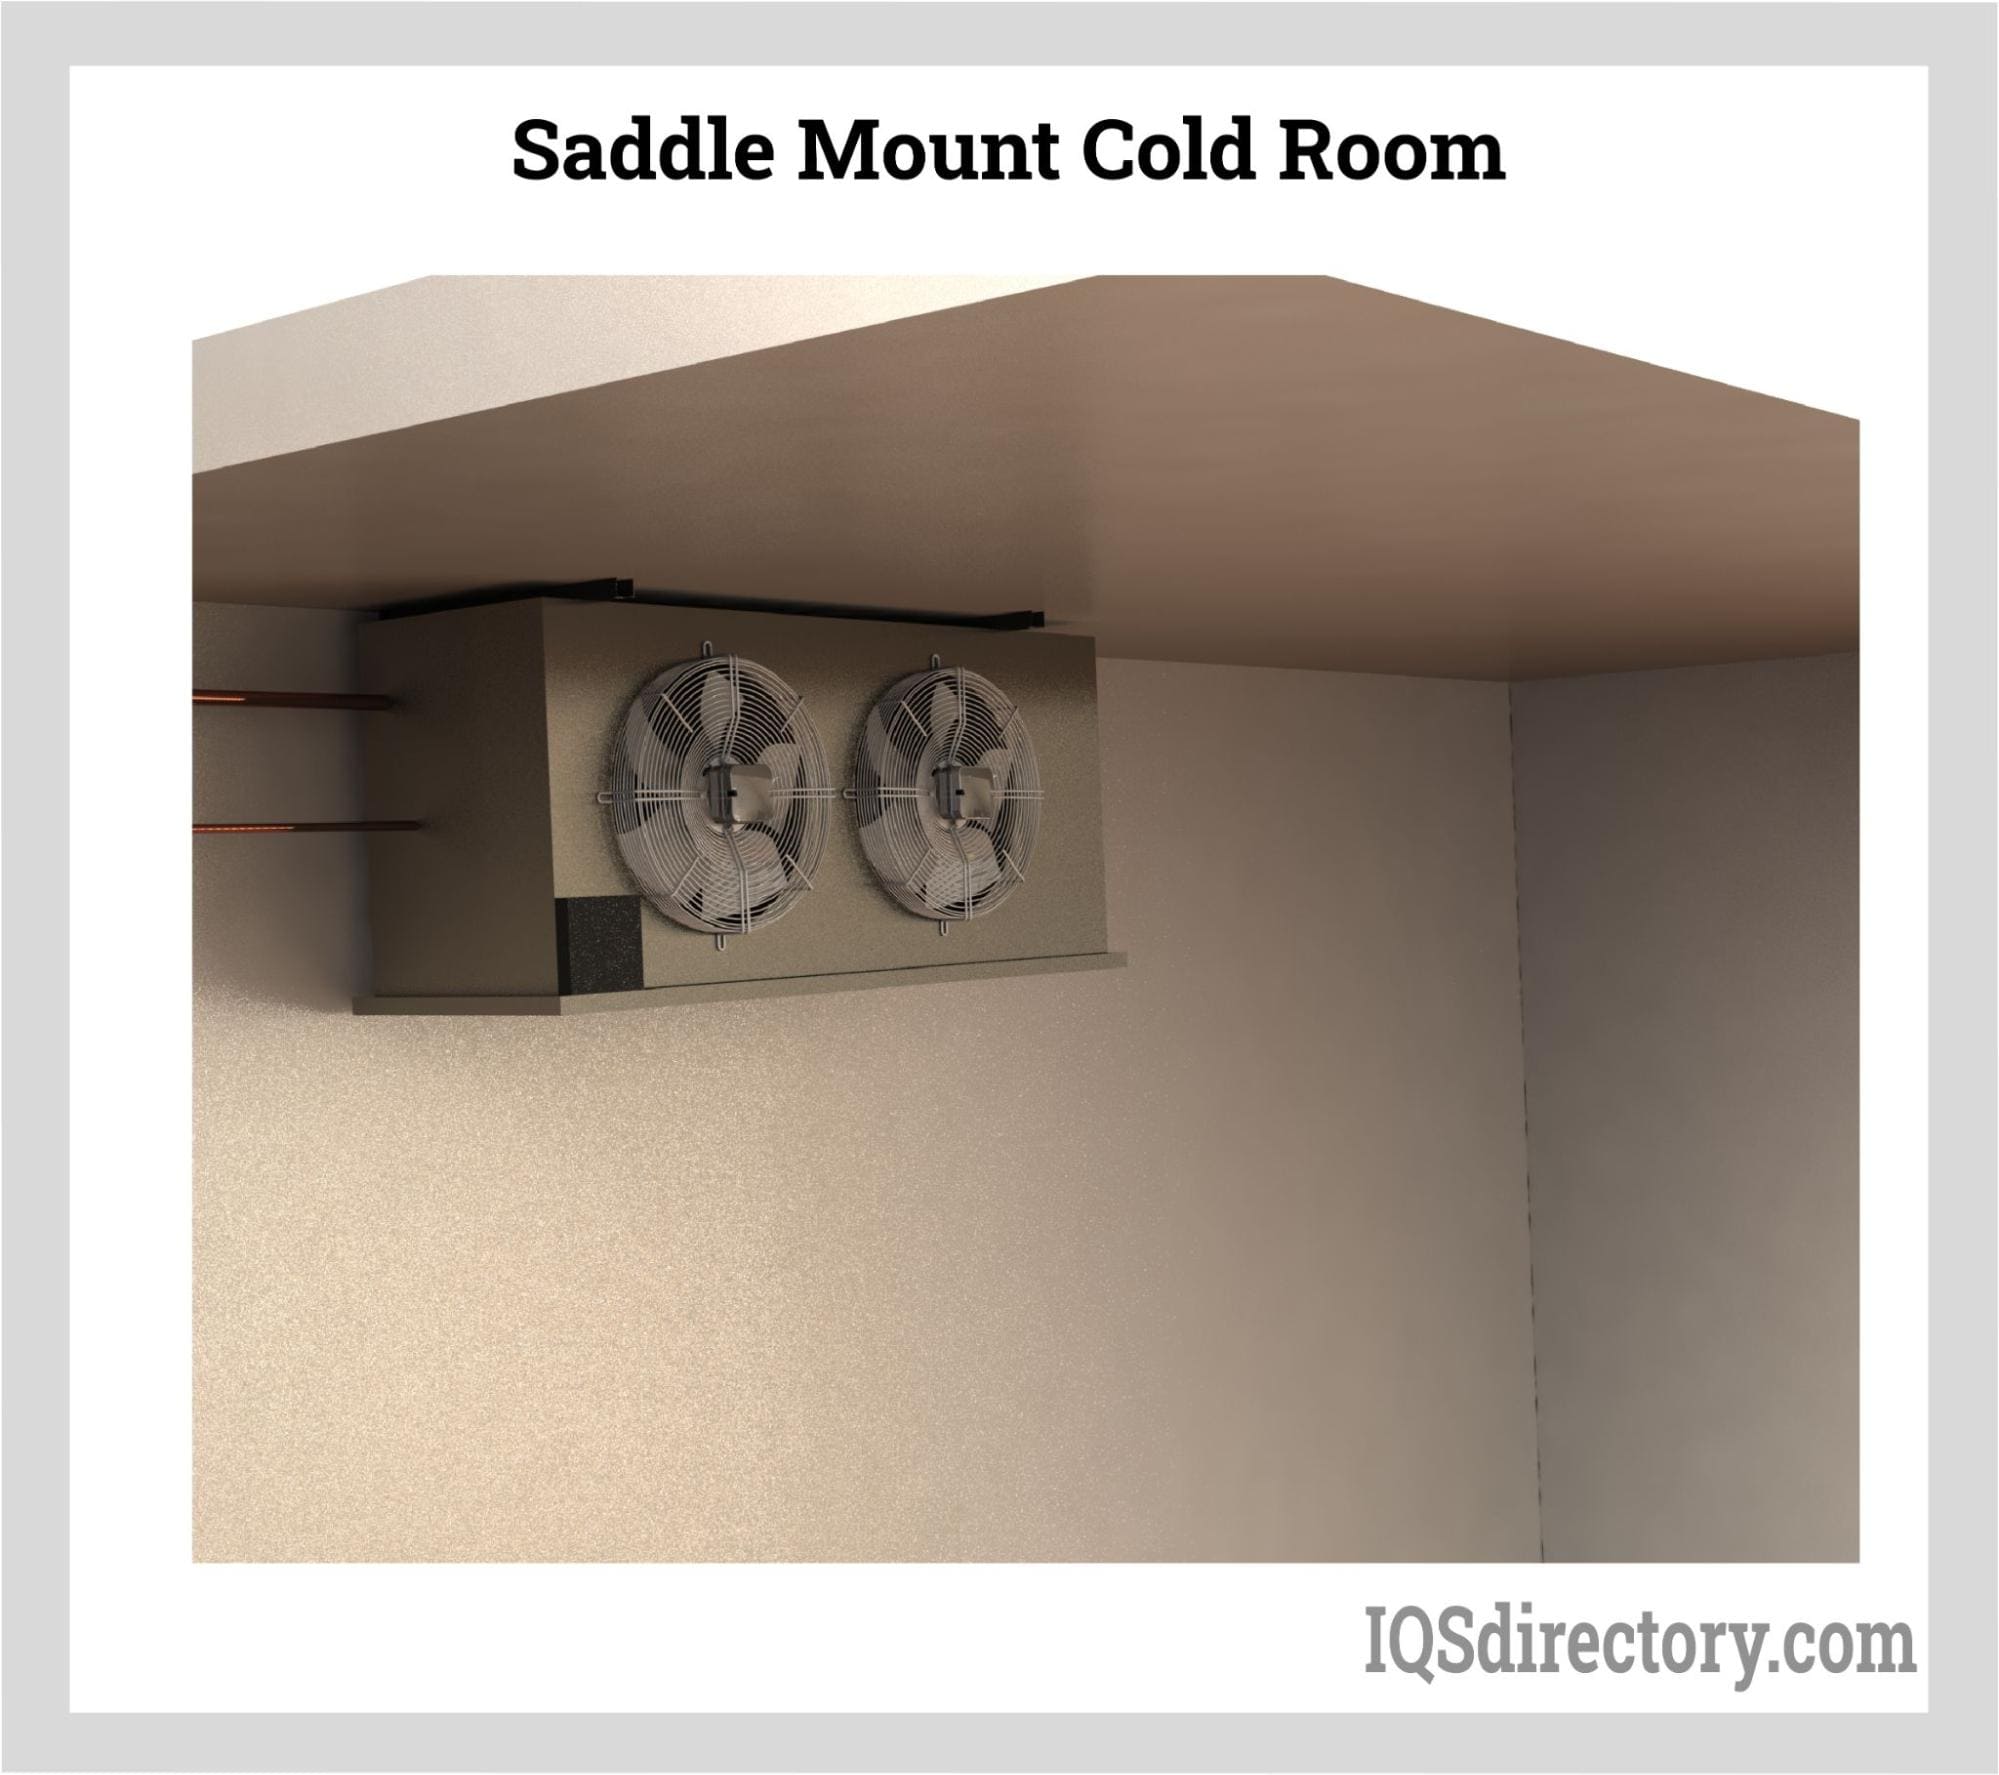 Saddle Mount Cold Room